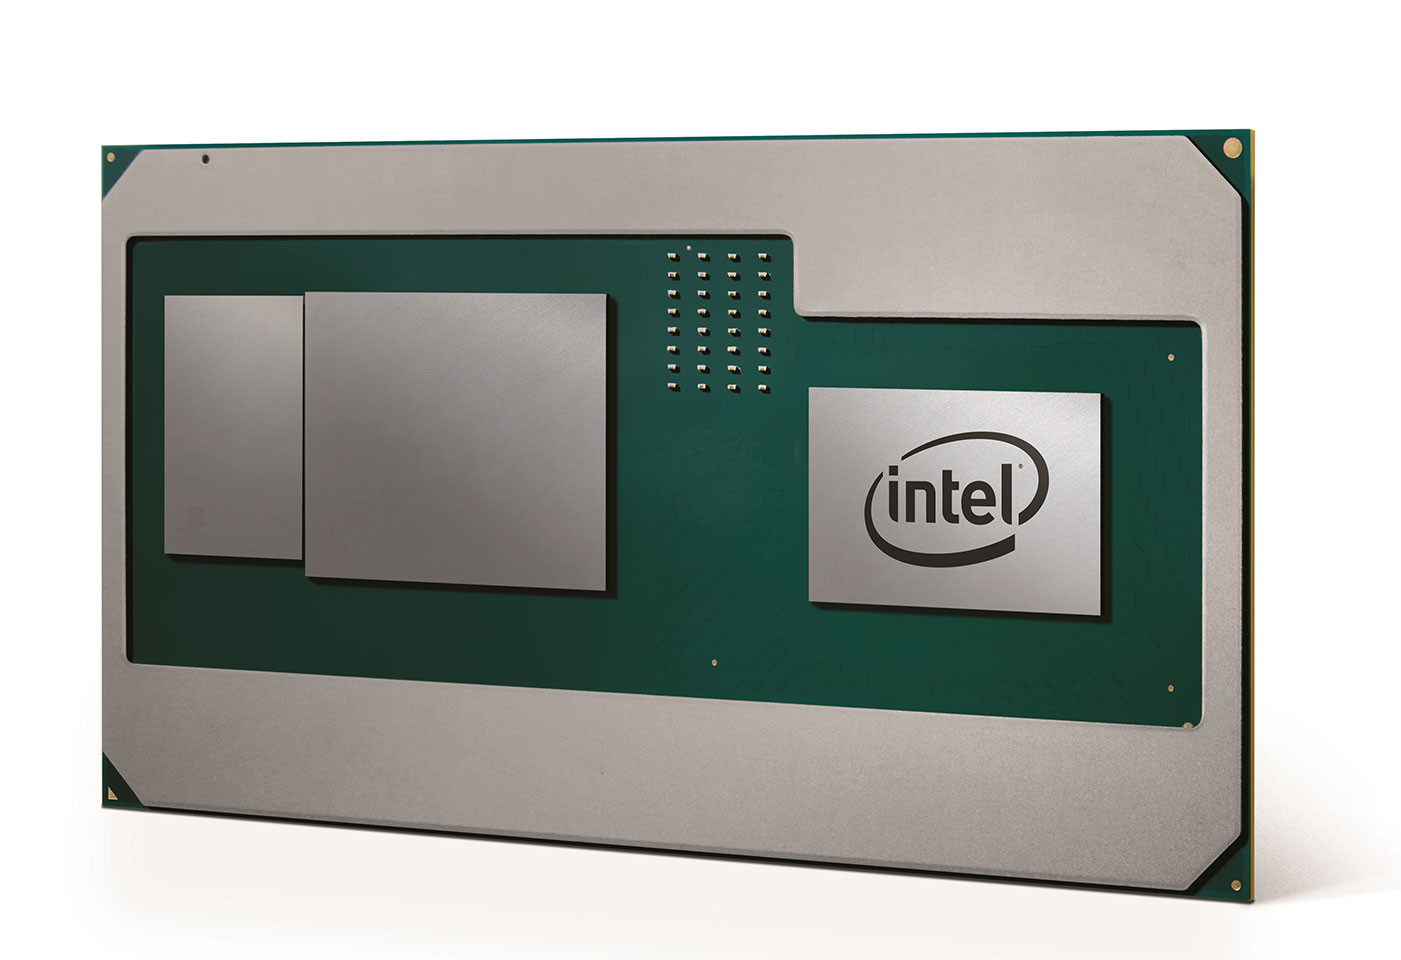 Intel Core i7-8809G with Vega M graphics